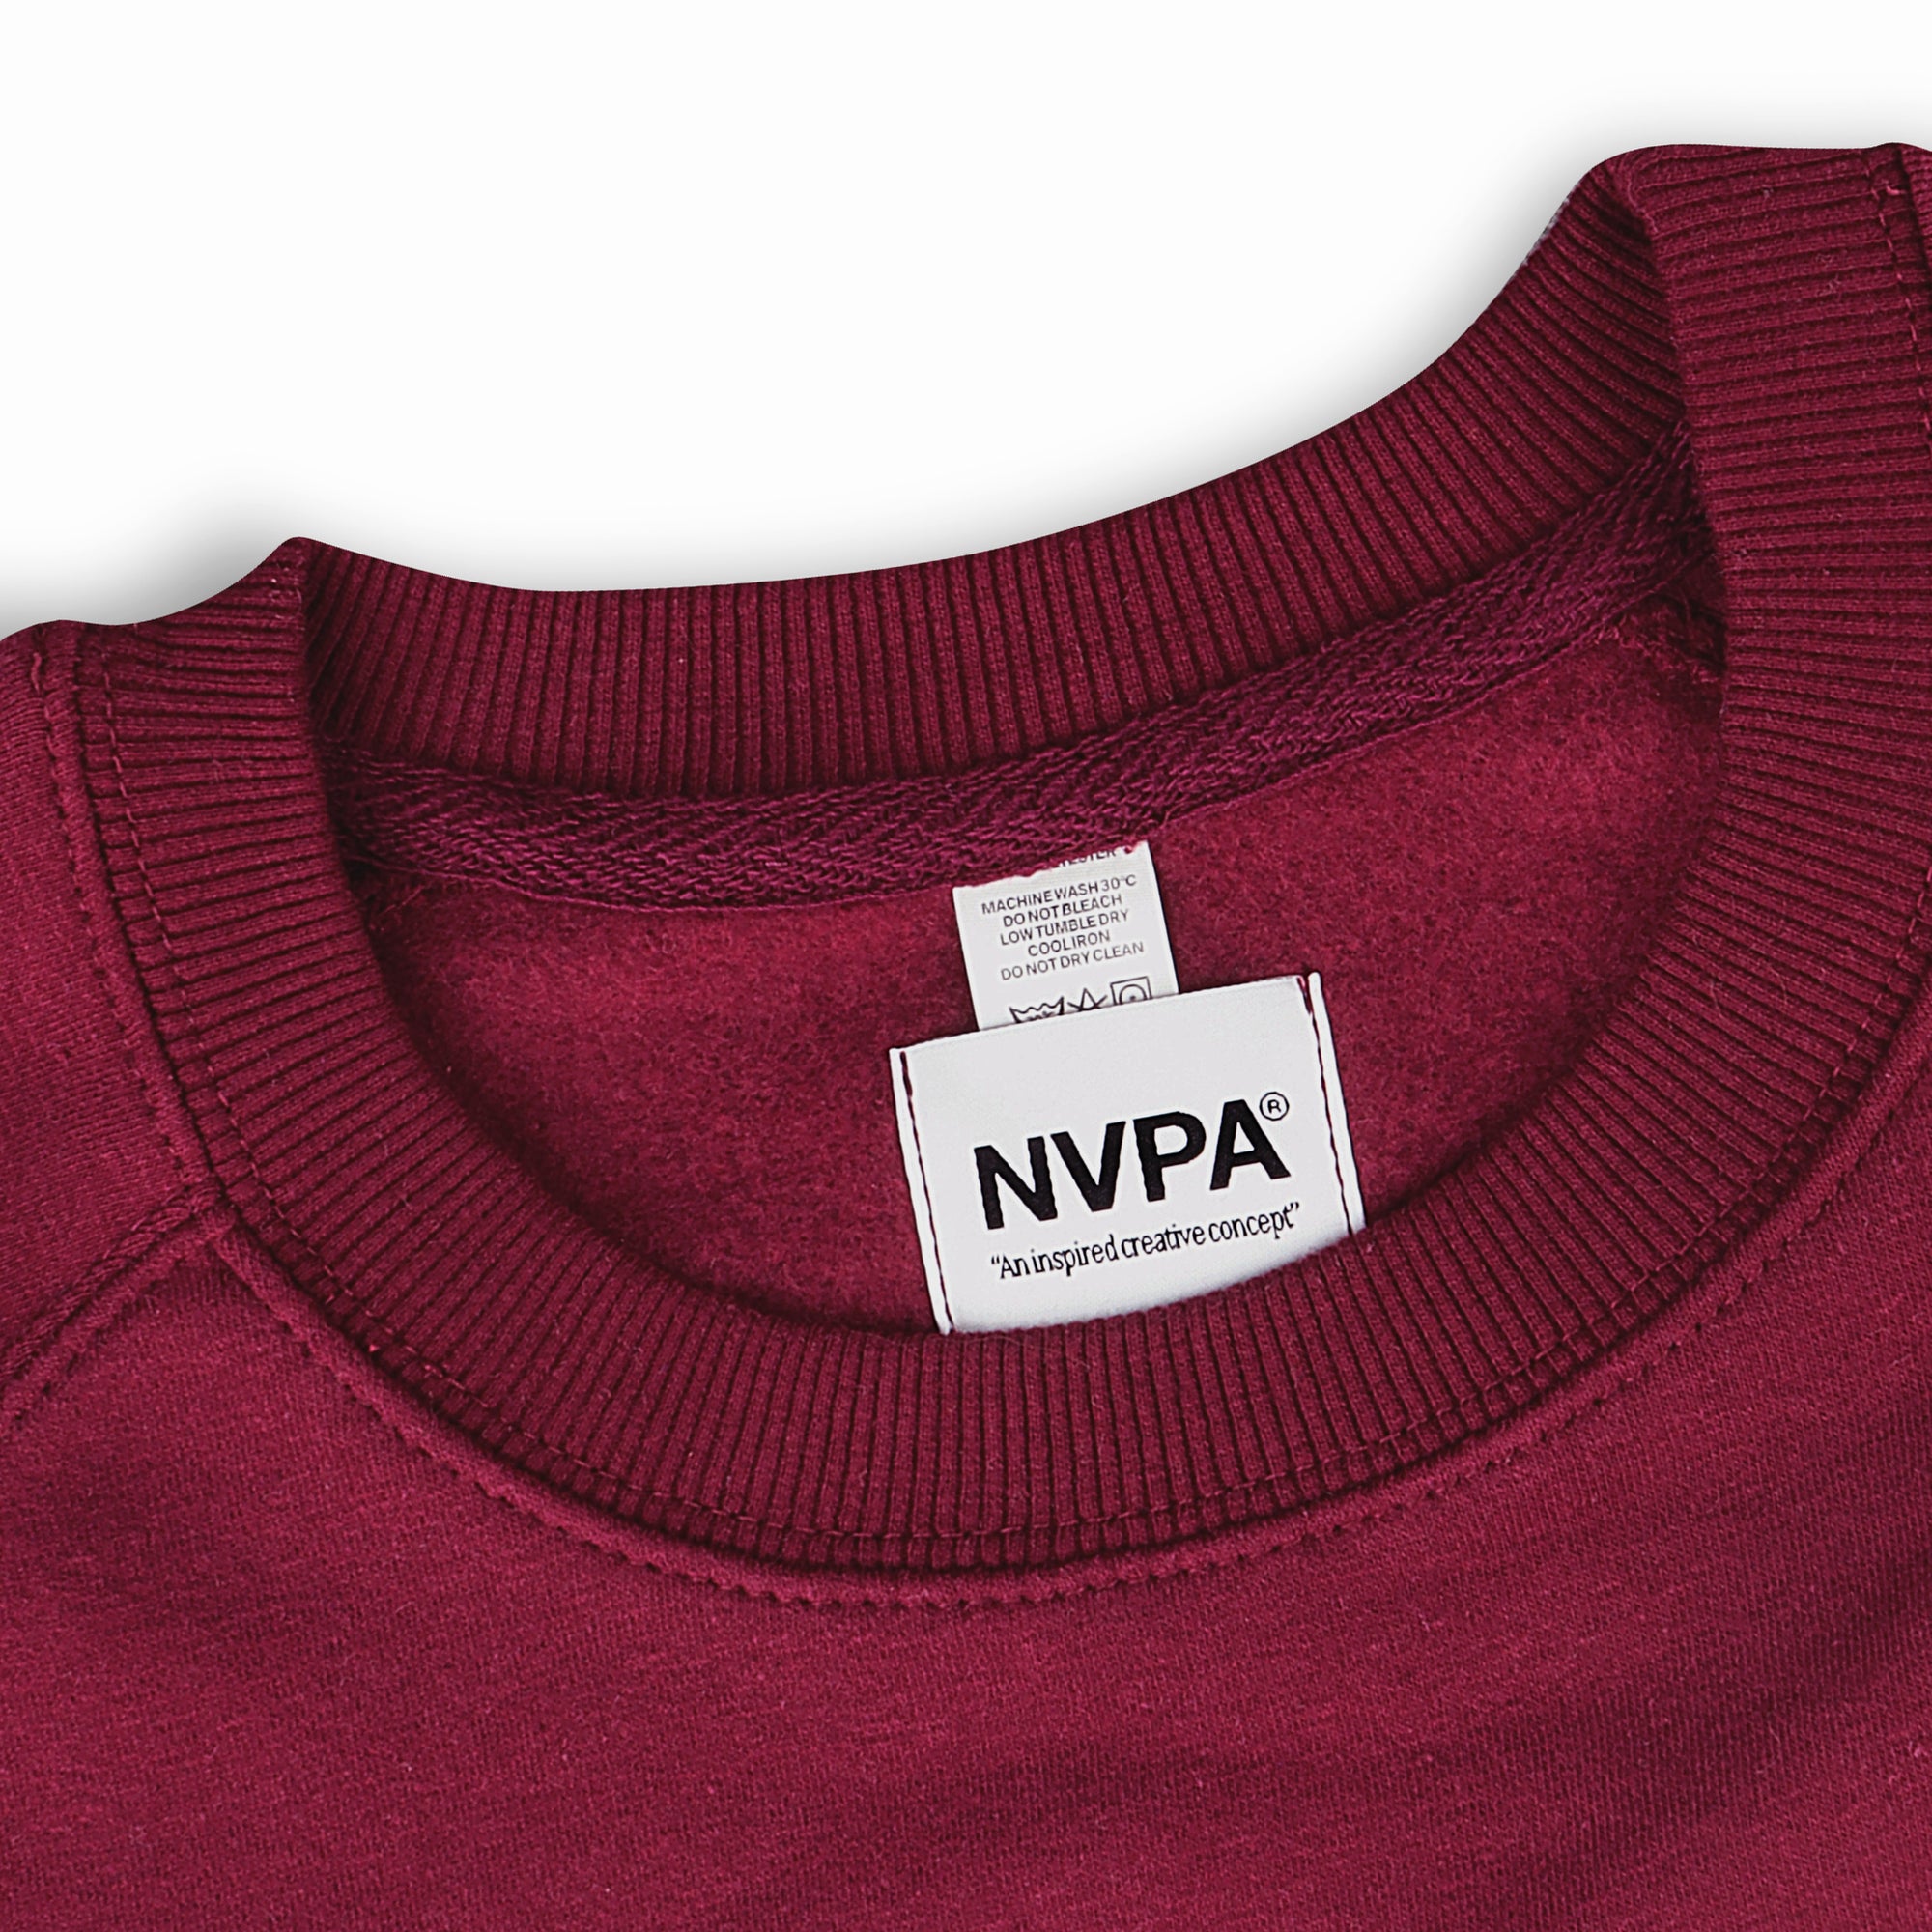 NVPA® Burgundy sweatshirt label detail